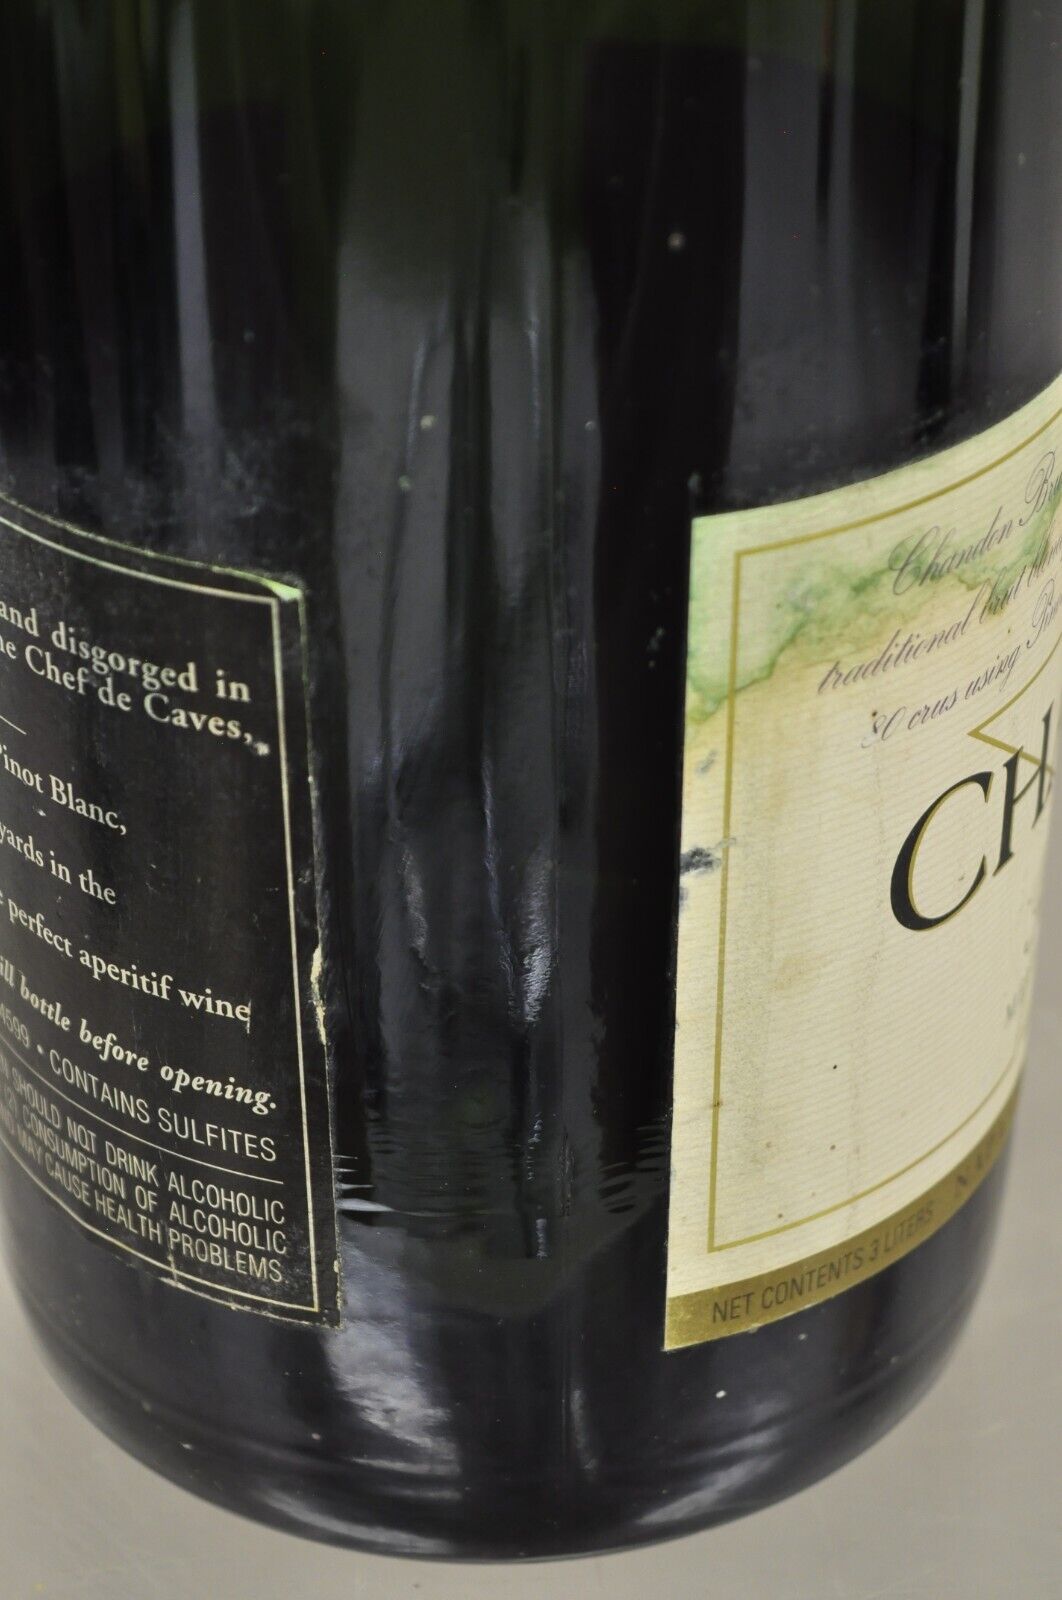 Chandon Brut Cuvee Chardonnay Vintage Display Dummy Wine Champagne Bottle